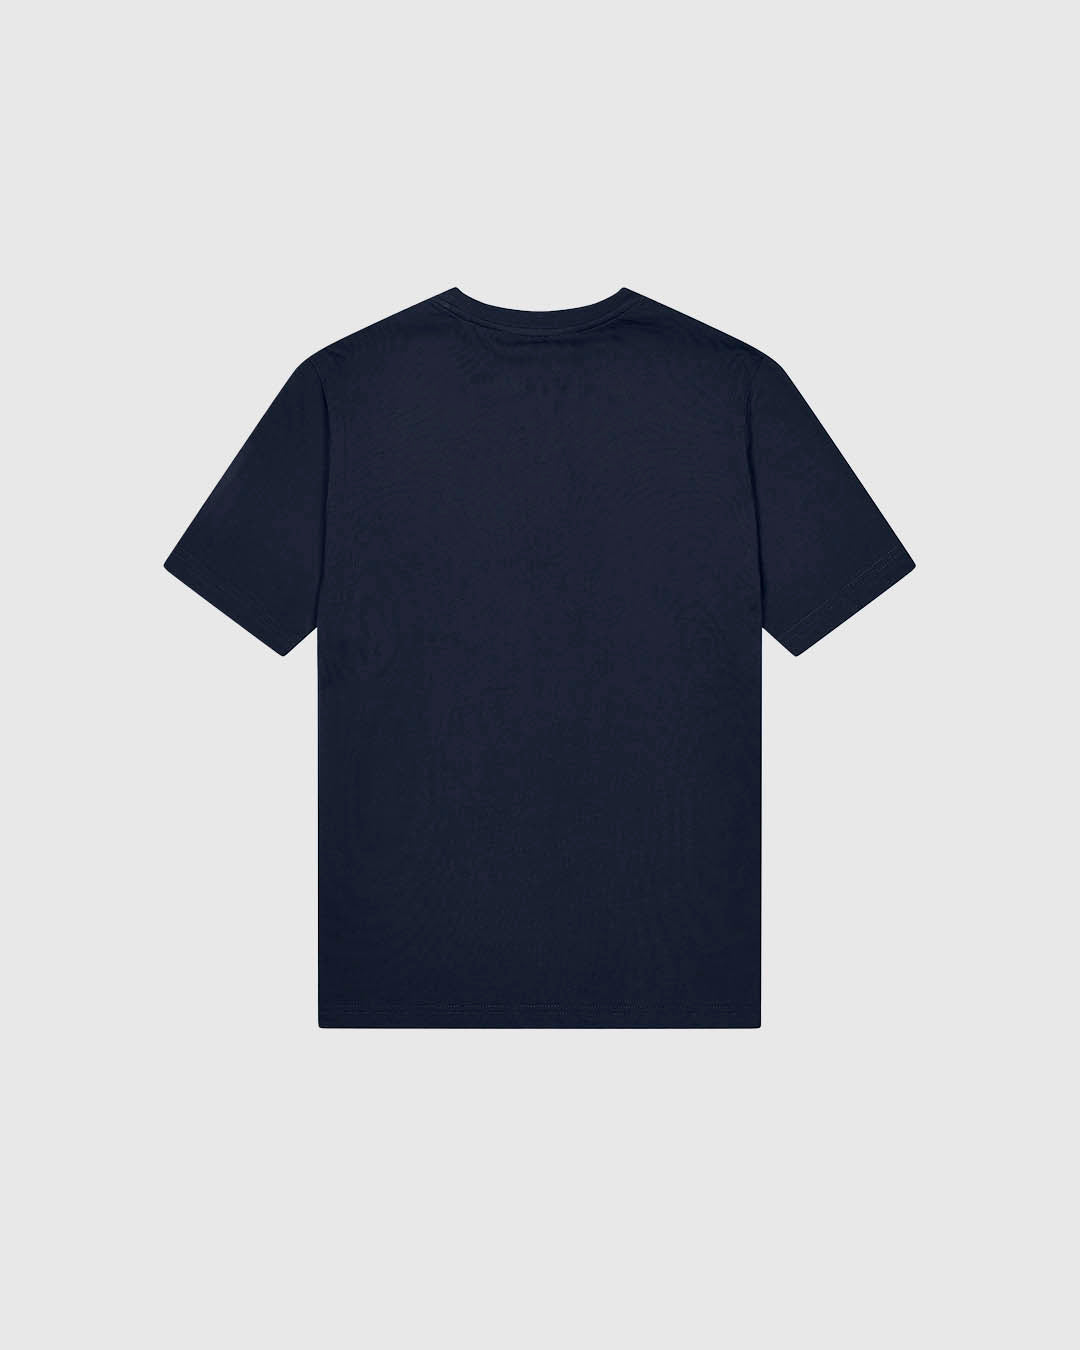 PFC: 003-1 - Women's T-shirt - Navy